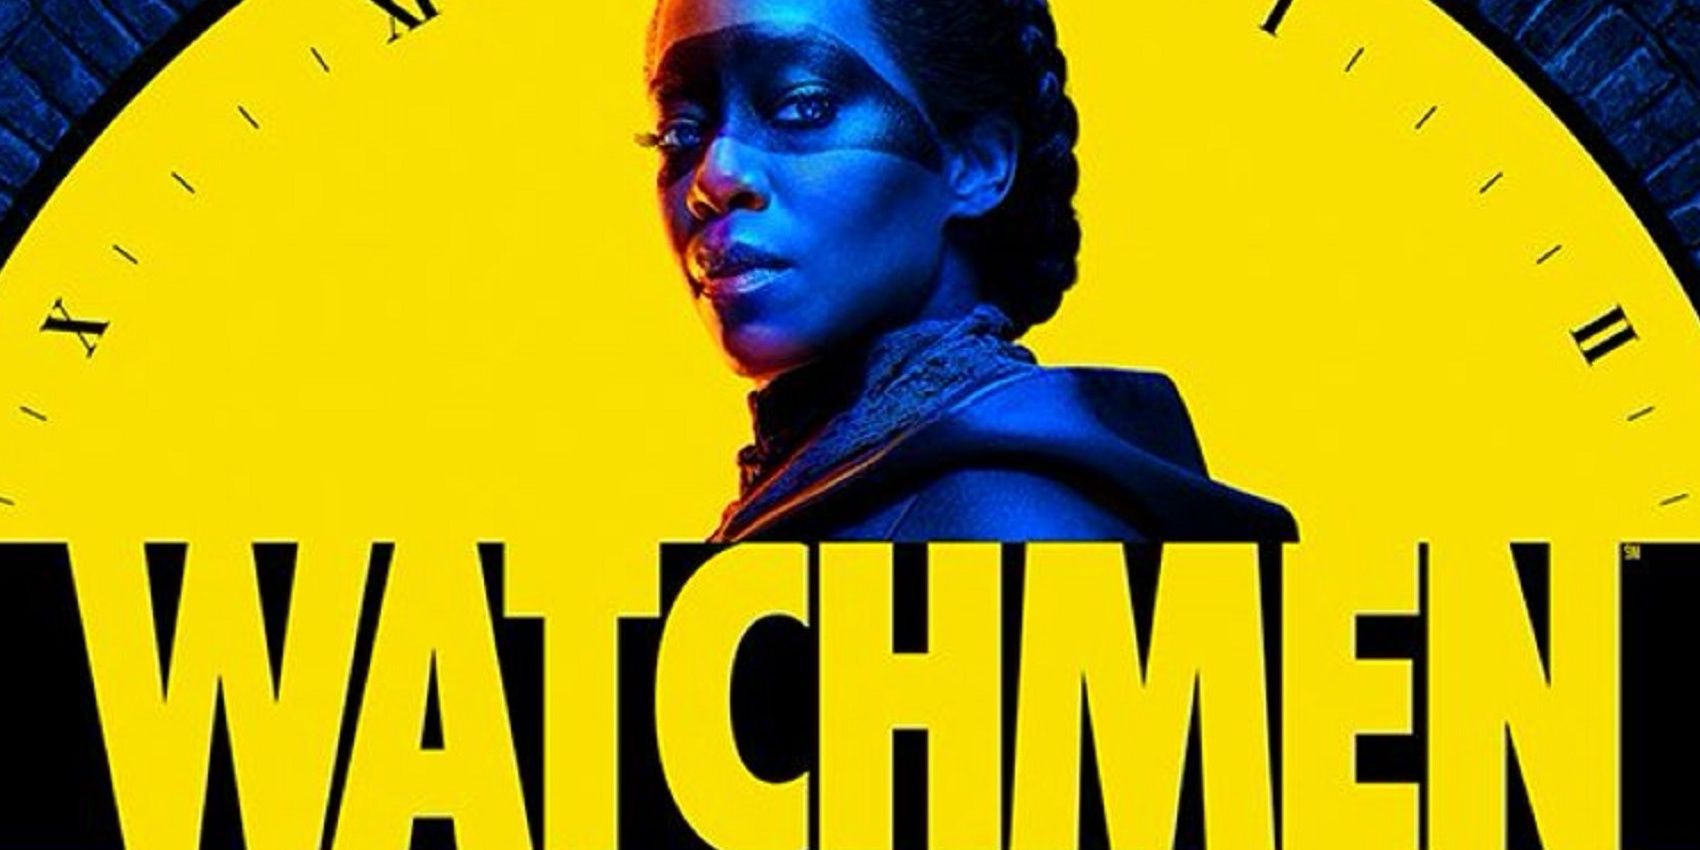 HBO's award-winning Watchmen series